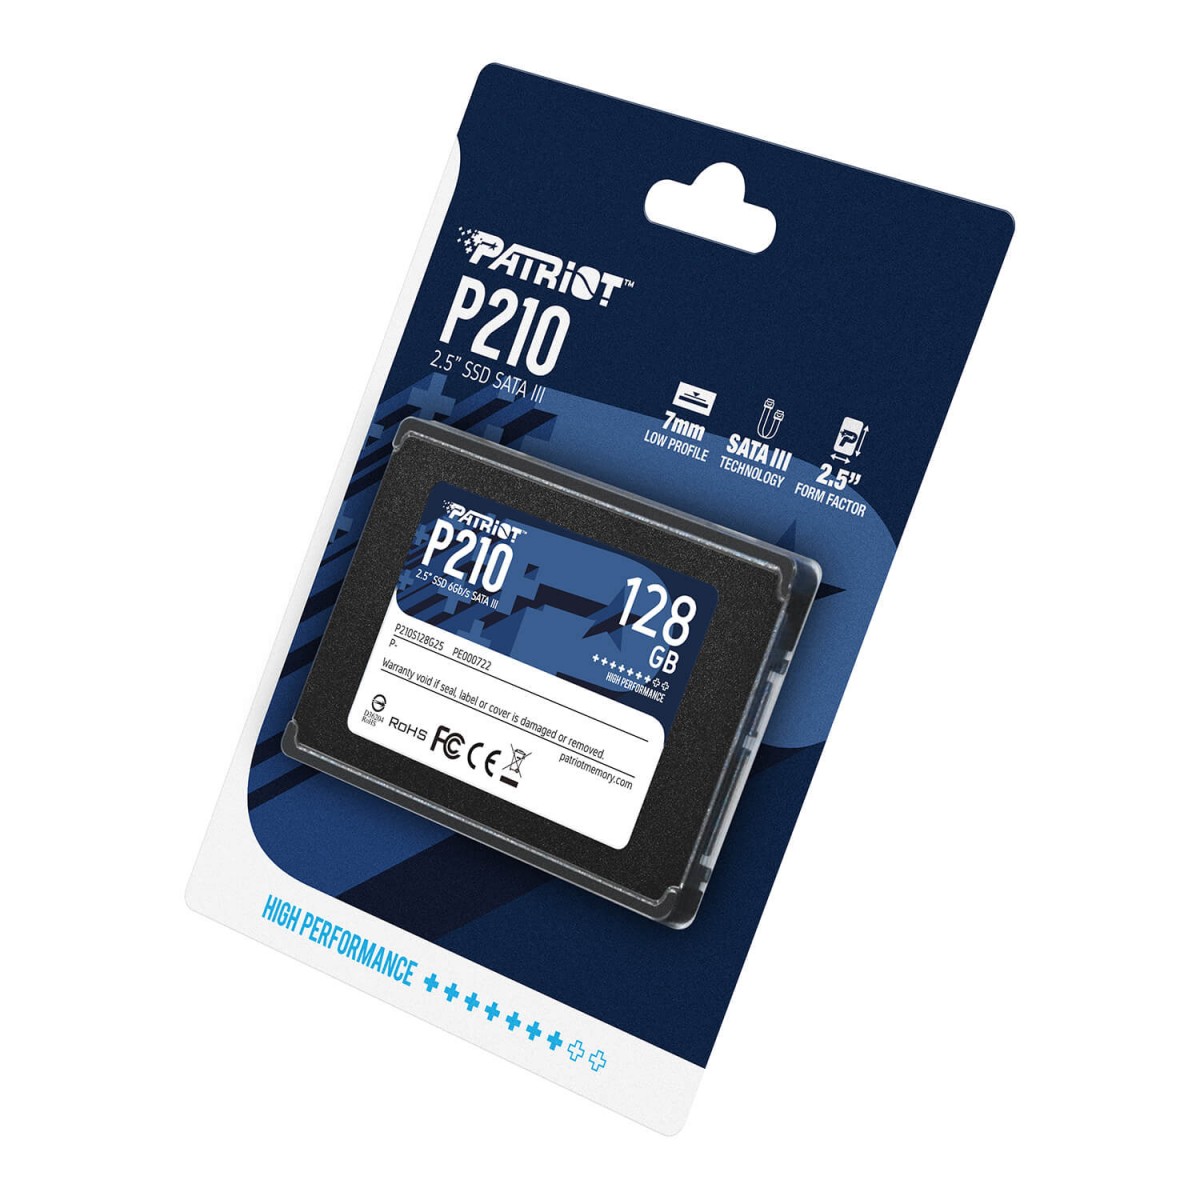 SSD Patriot P210, 128GB, Sata III, Leitura 500MB/s e Gravação 400MB/s, P210S128G25